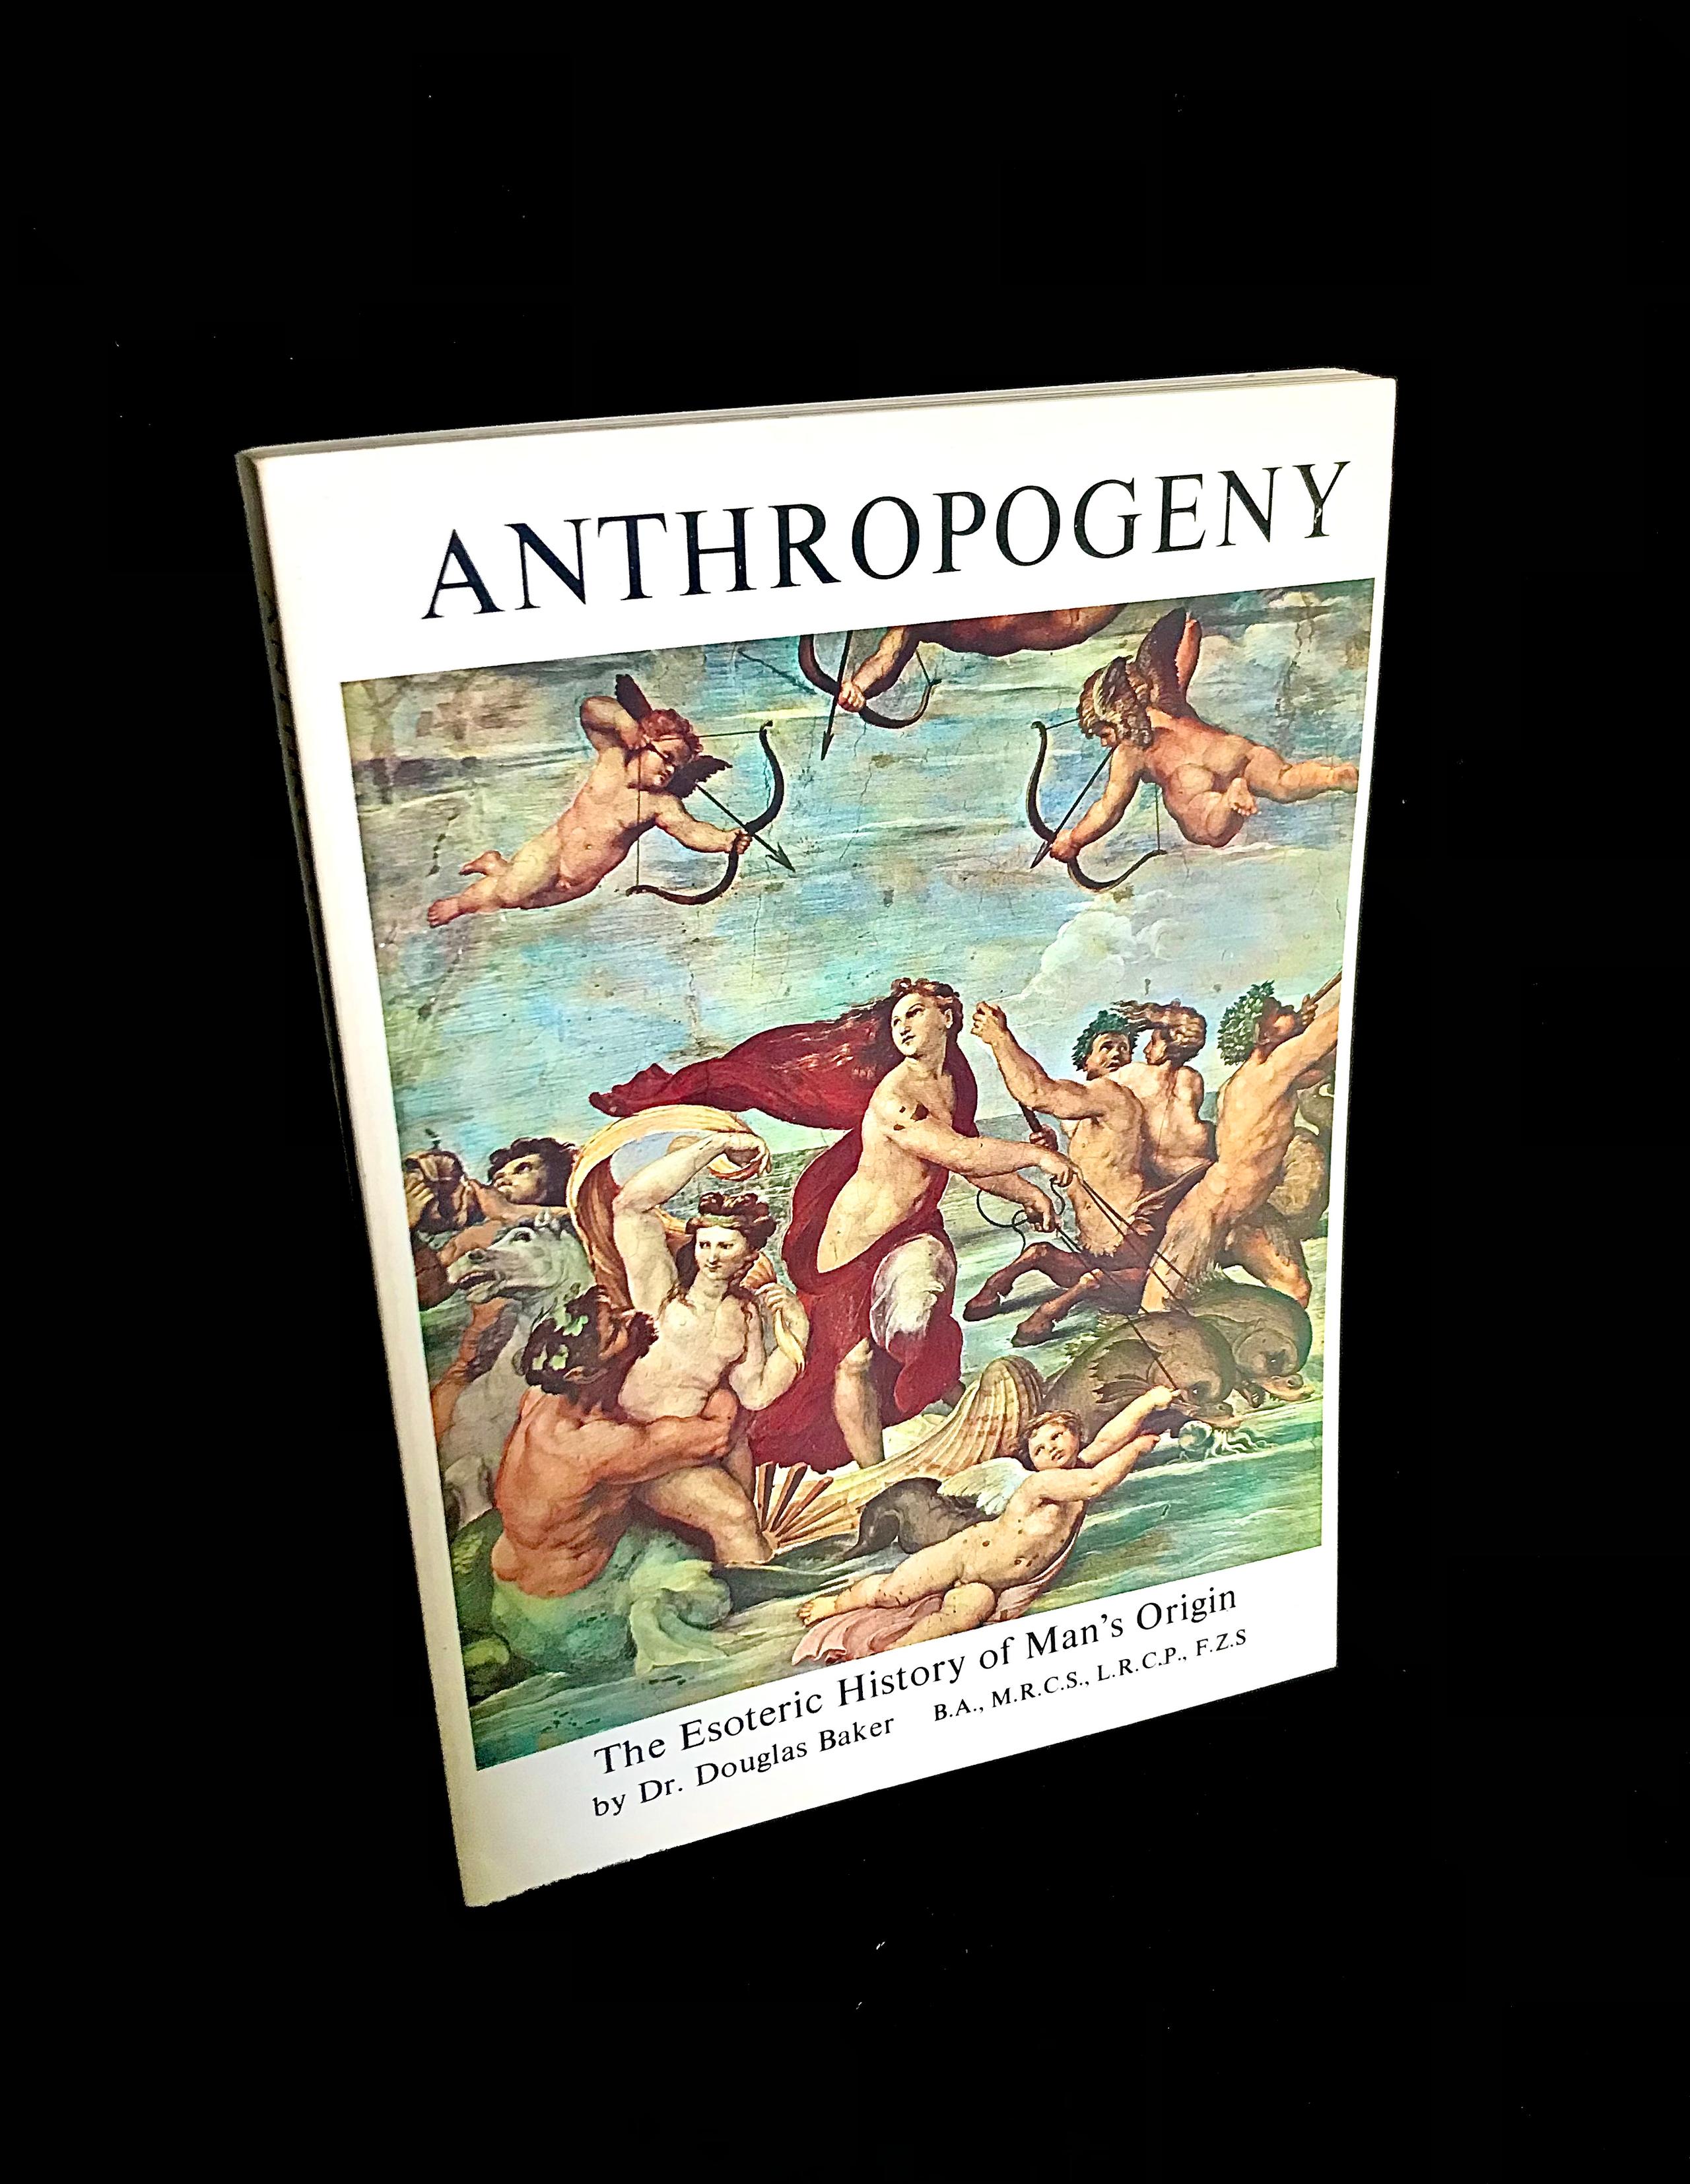 Anthropogeny: The Esoteric History Man's Origins by Dr. Douglas Baker